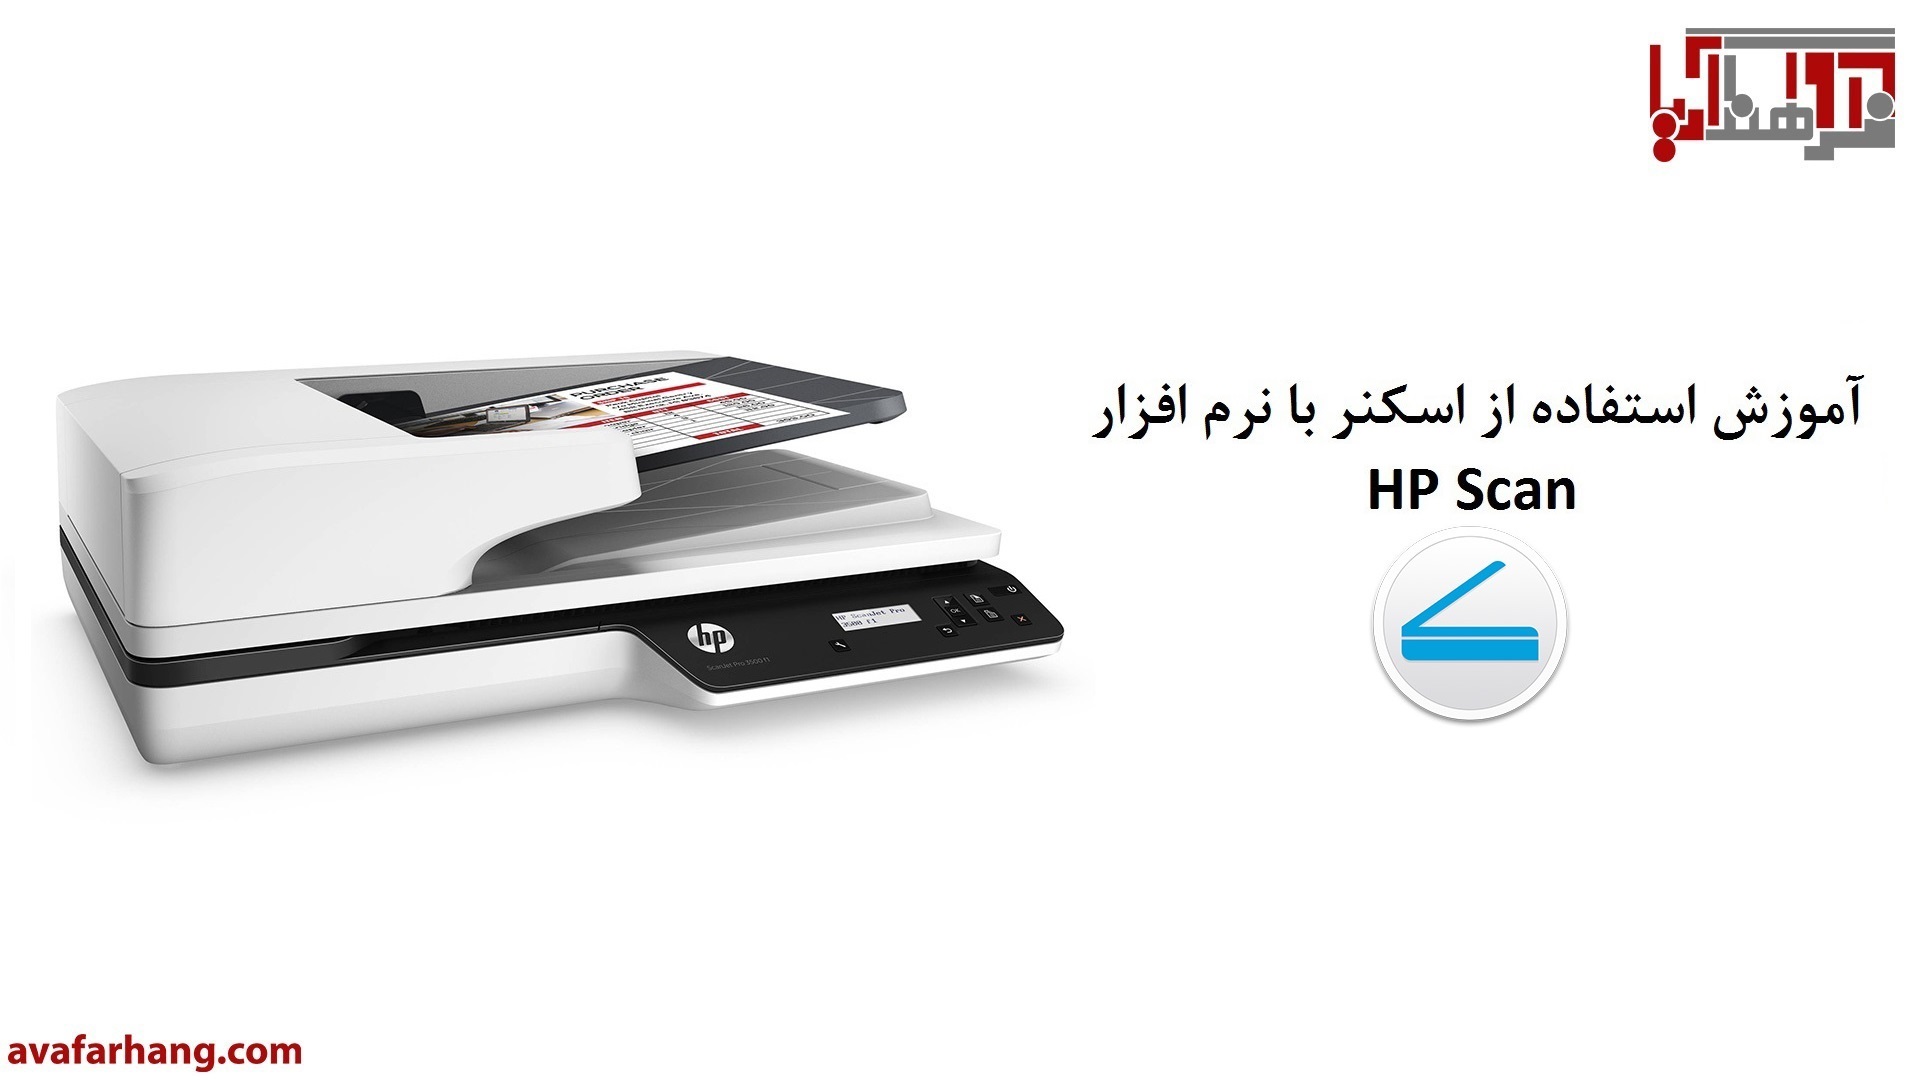 HP Scan نرم افزار اسکنر hp - راهنمای استفاده از اسکنر اچ پی